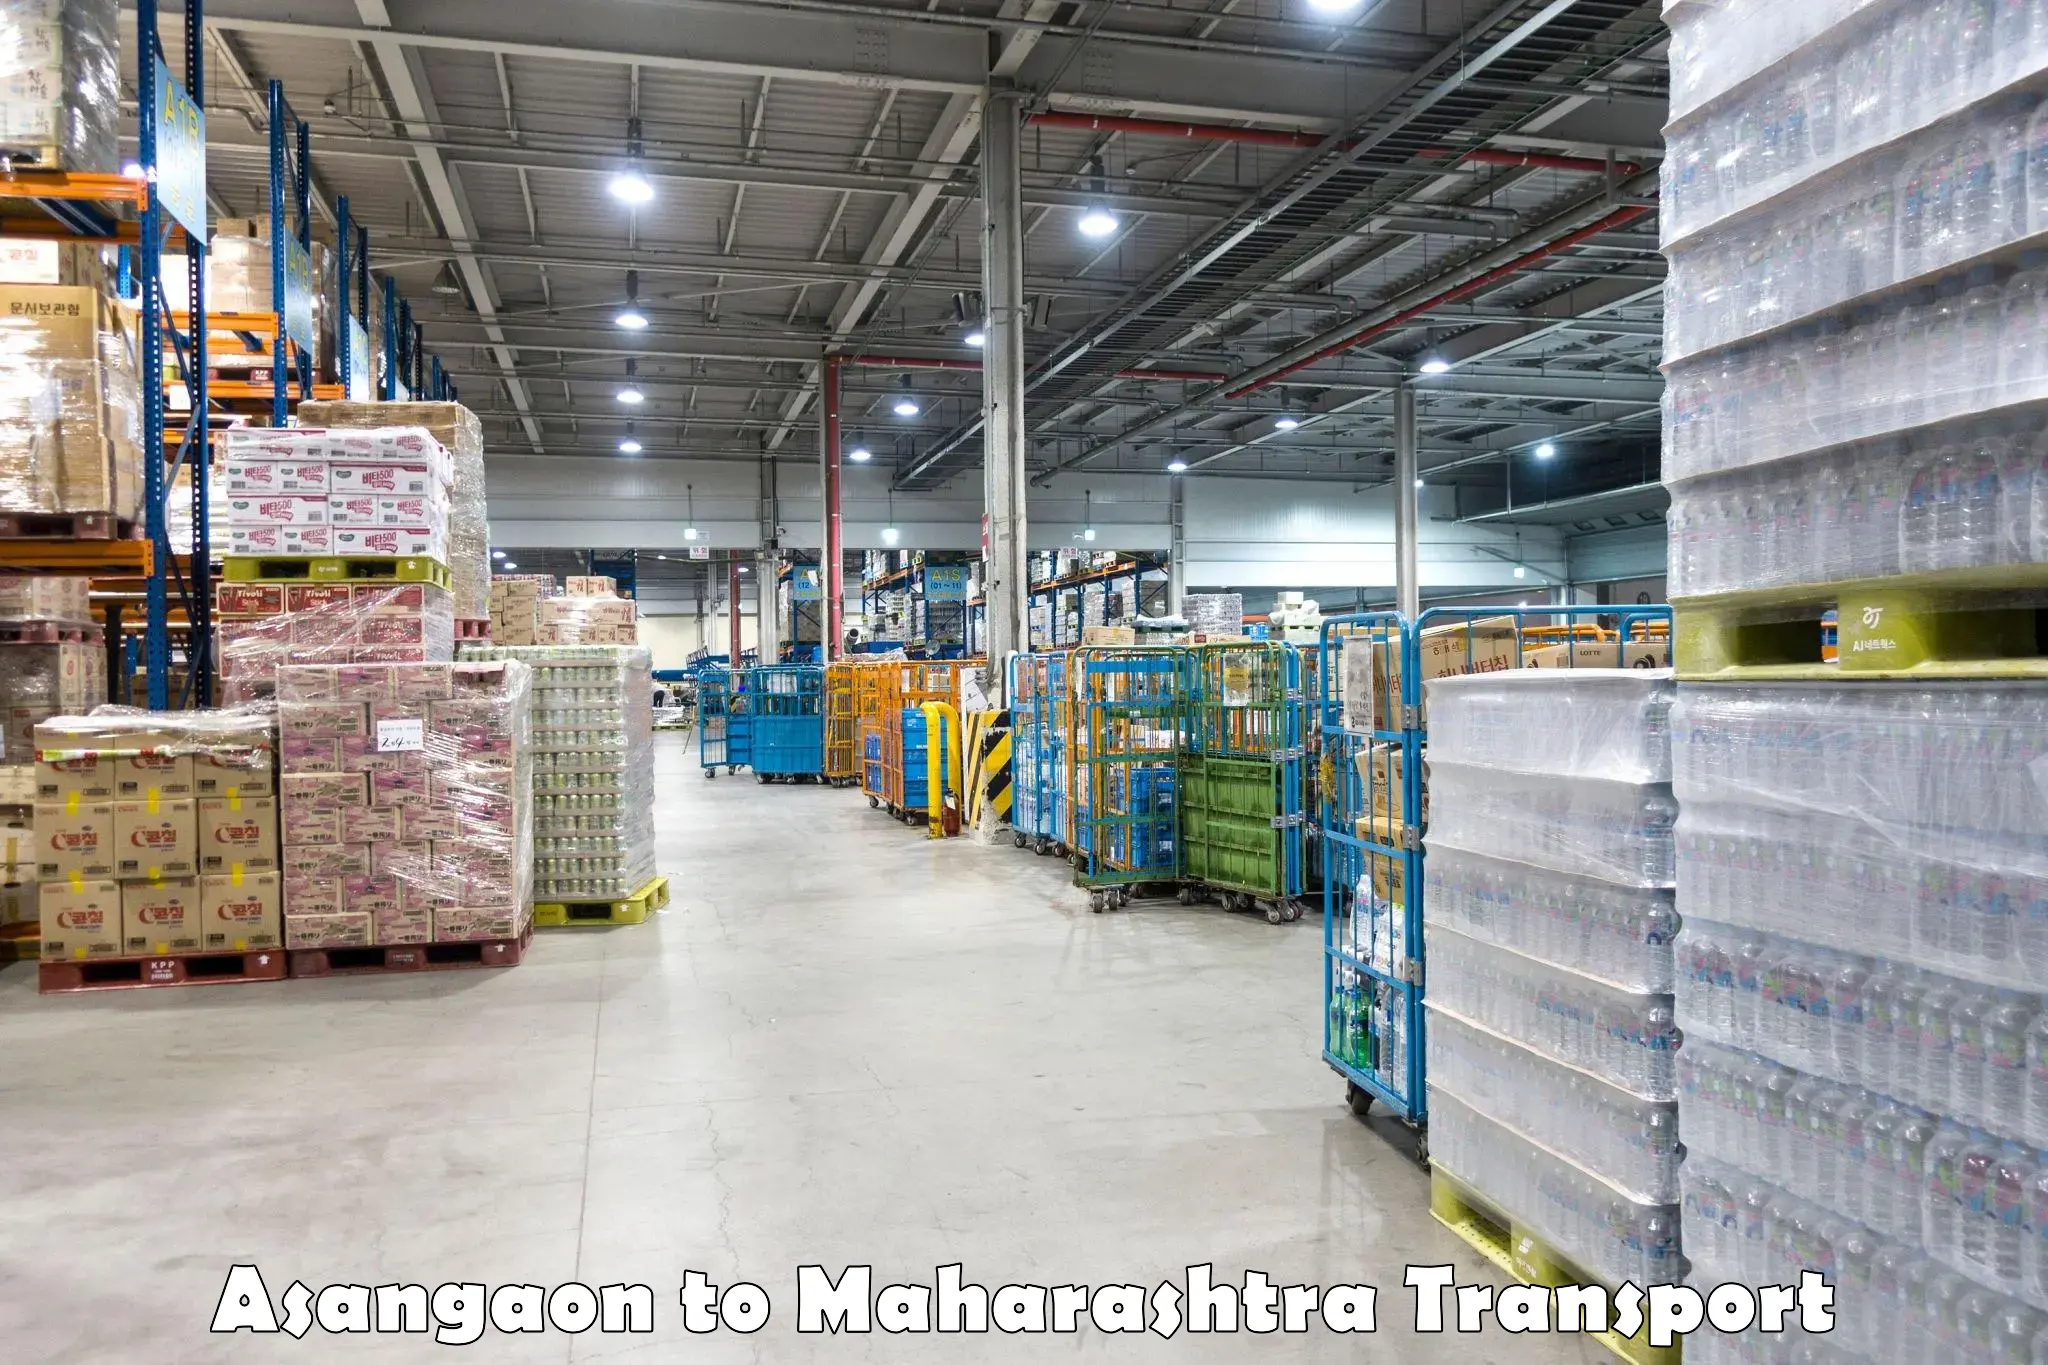 Truck transport companies in India Asangaon to Andheri